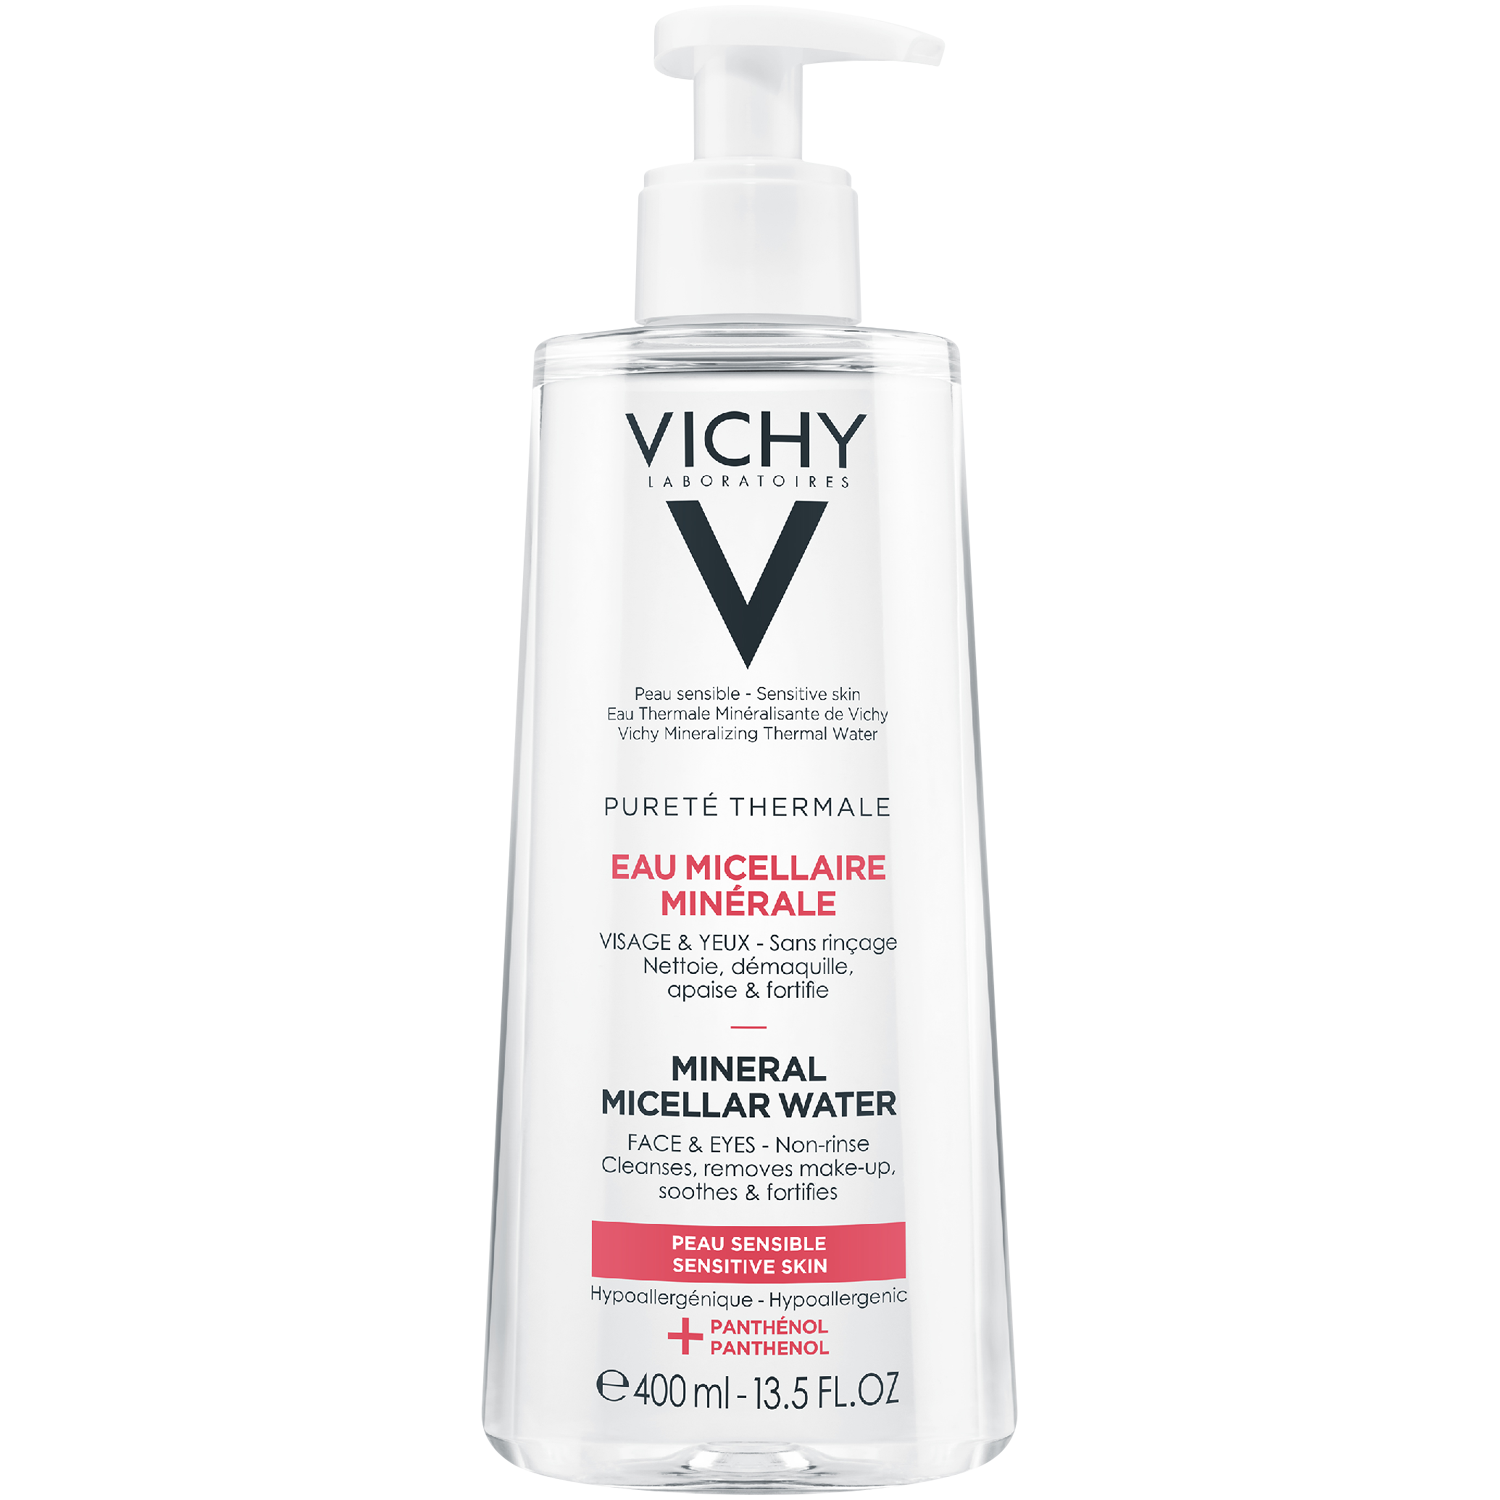 Vichy Purete Thermale мицеллярная вода для чувствительной кожи, 400 мл мицеллярная вода для чувствительной кожи vichy purete thermale 100мл